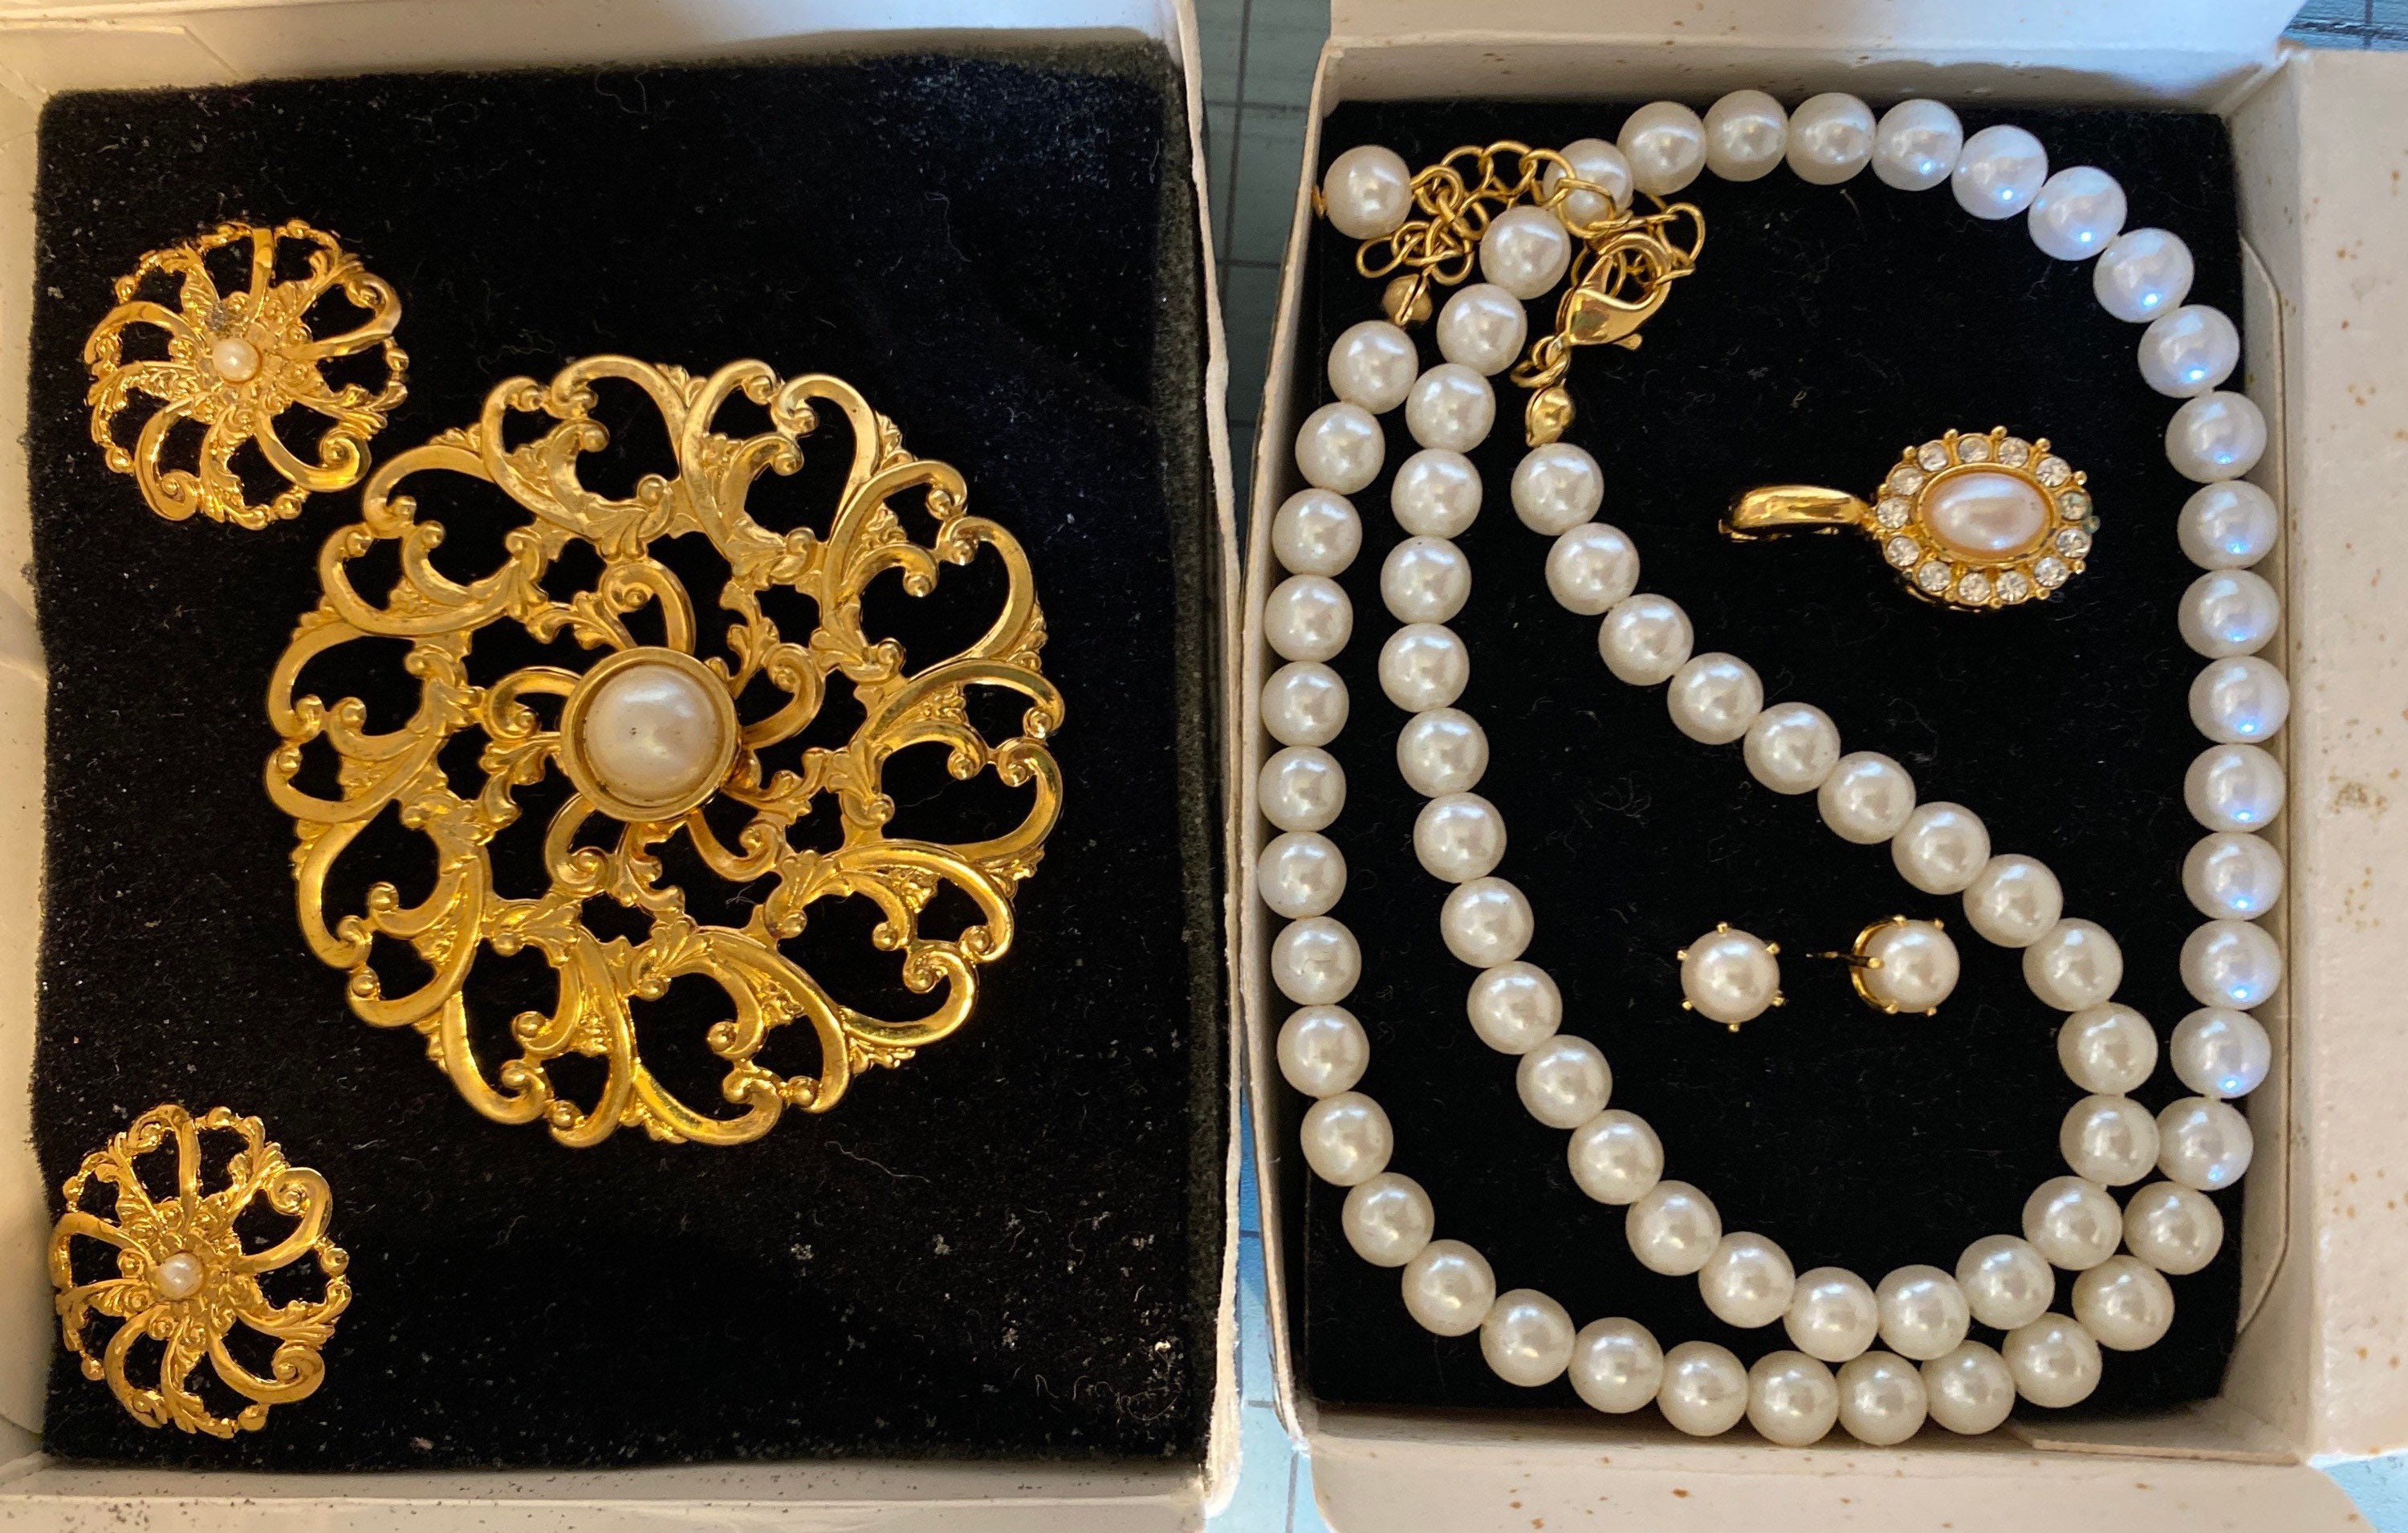 Buy Lovely Avonpearl Necklace W/rhinestones/earrings Online in India - Etsy